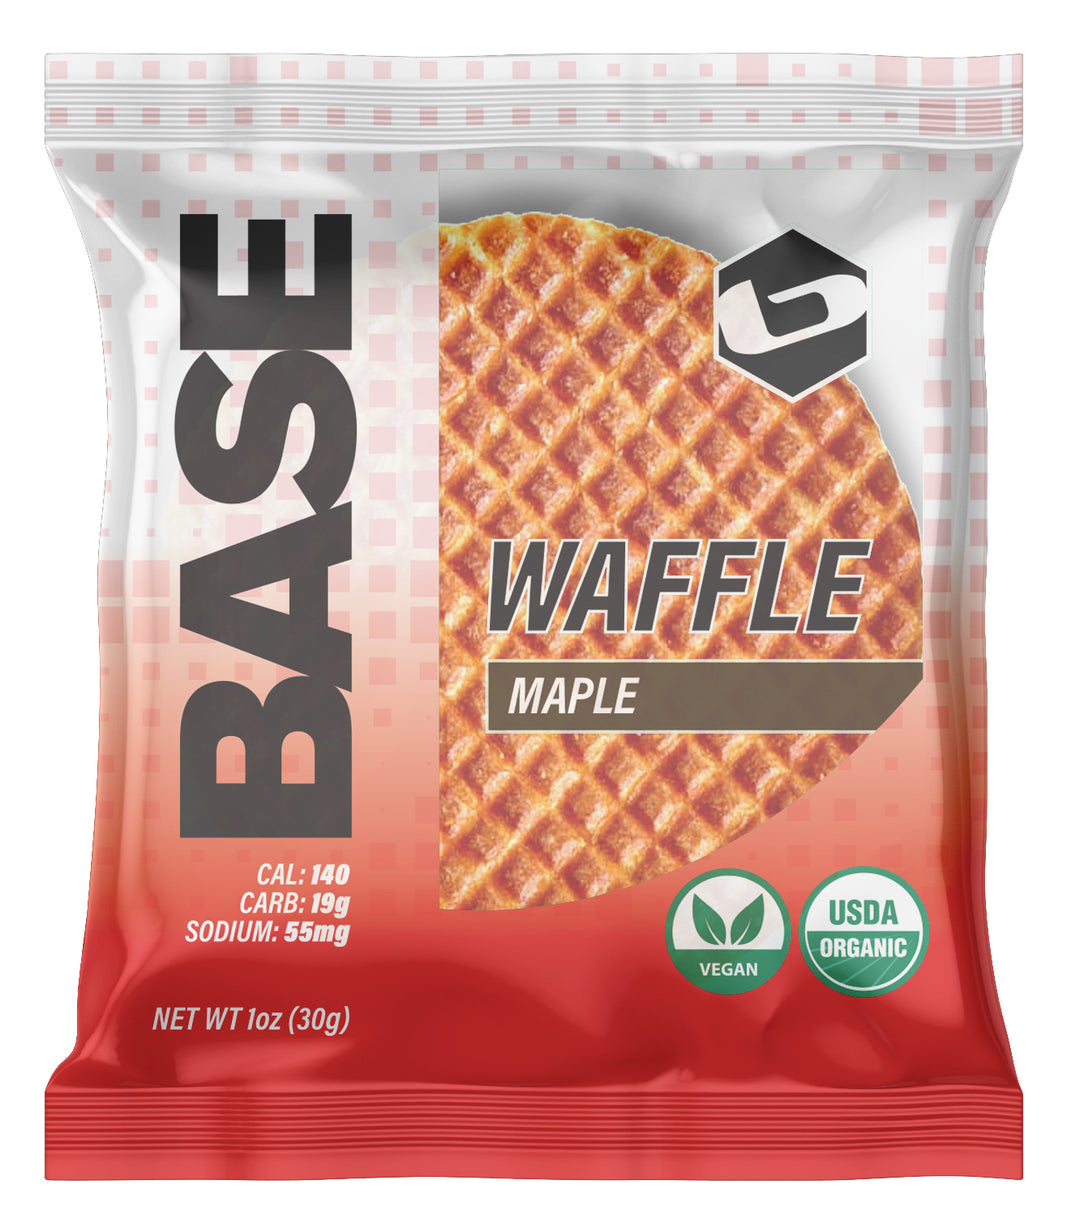 BASE WAFFLES in Maple (12 Packs)